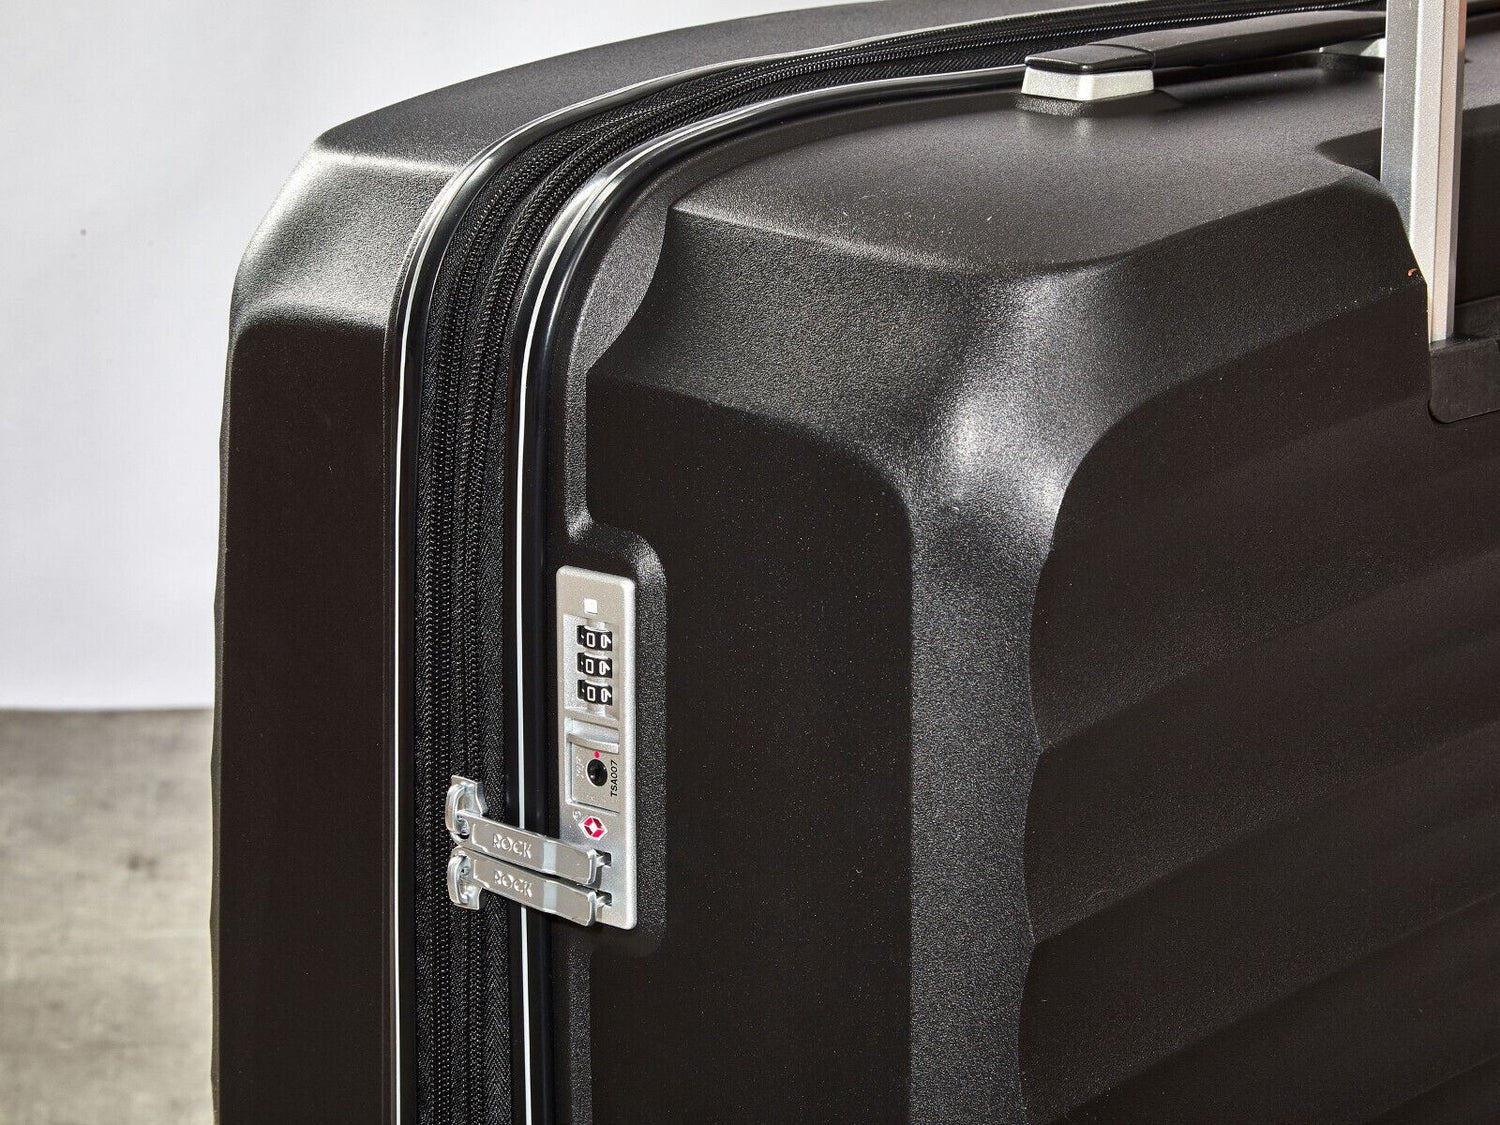 Altoona Large Hard Shell Suitcase in Black